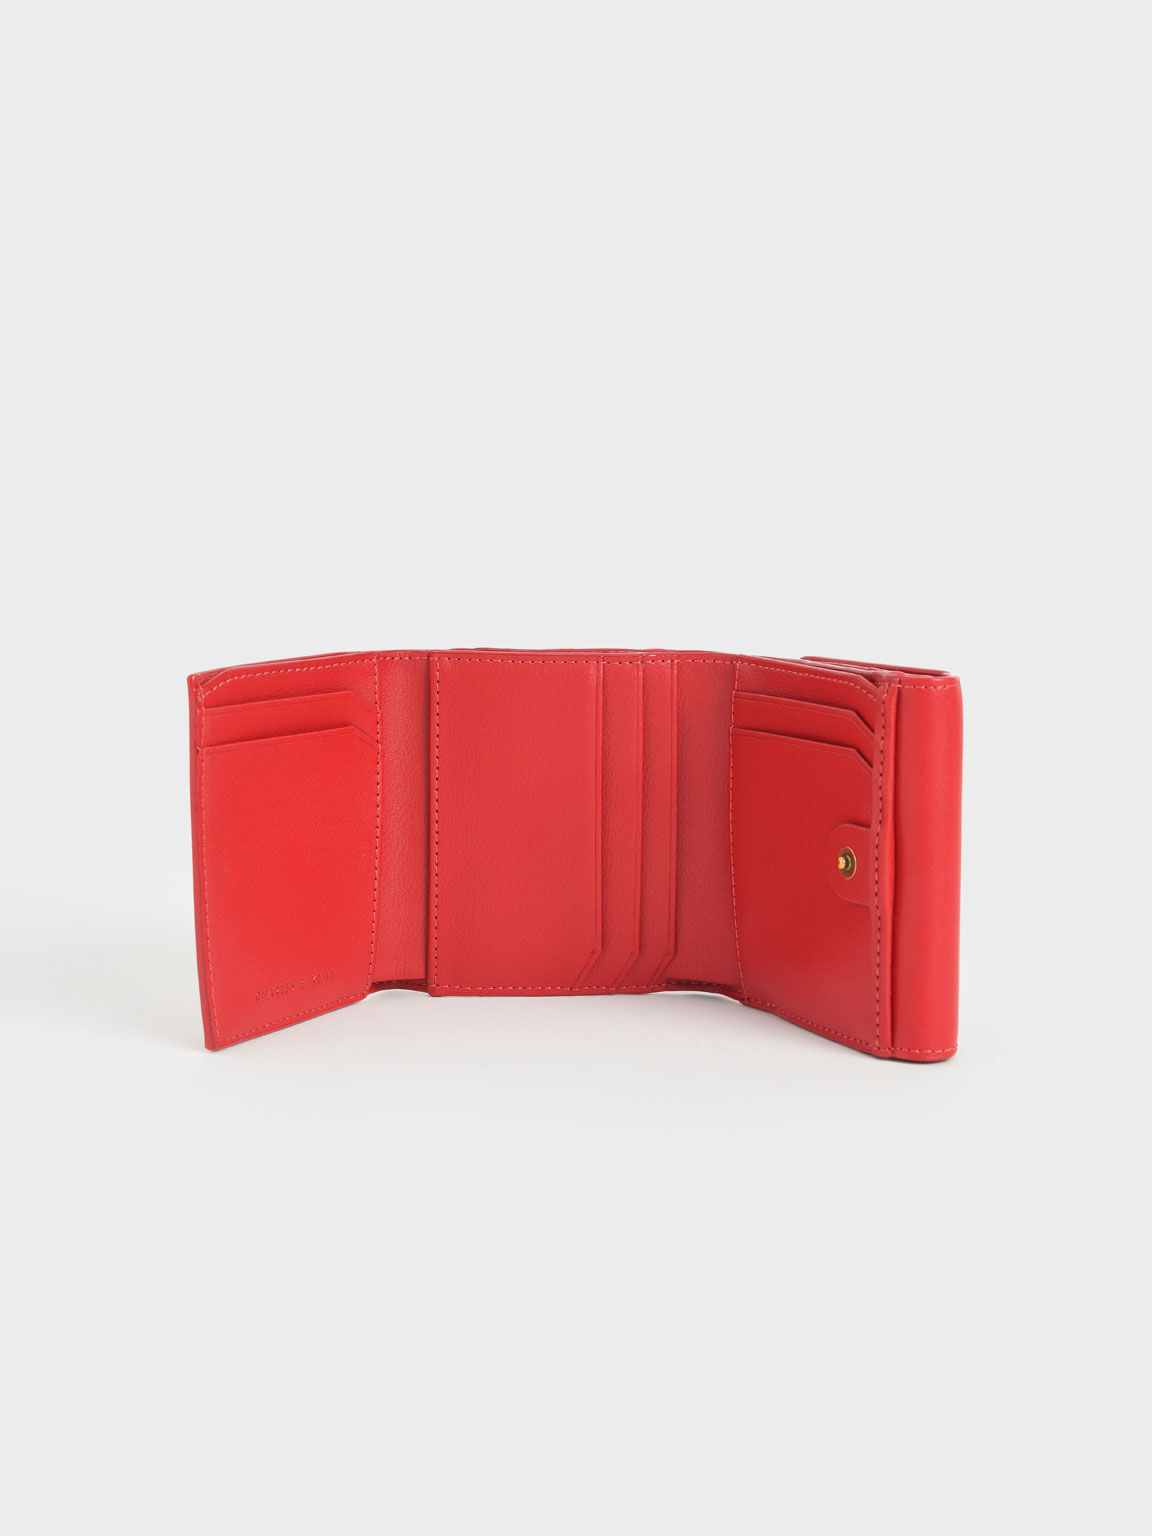 Edna Metallic Turn-Lock Short Wallet, Red, hi-res